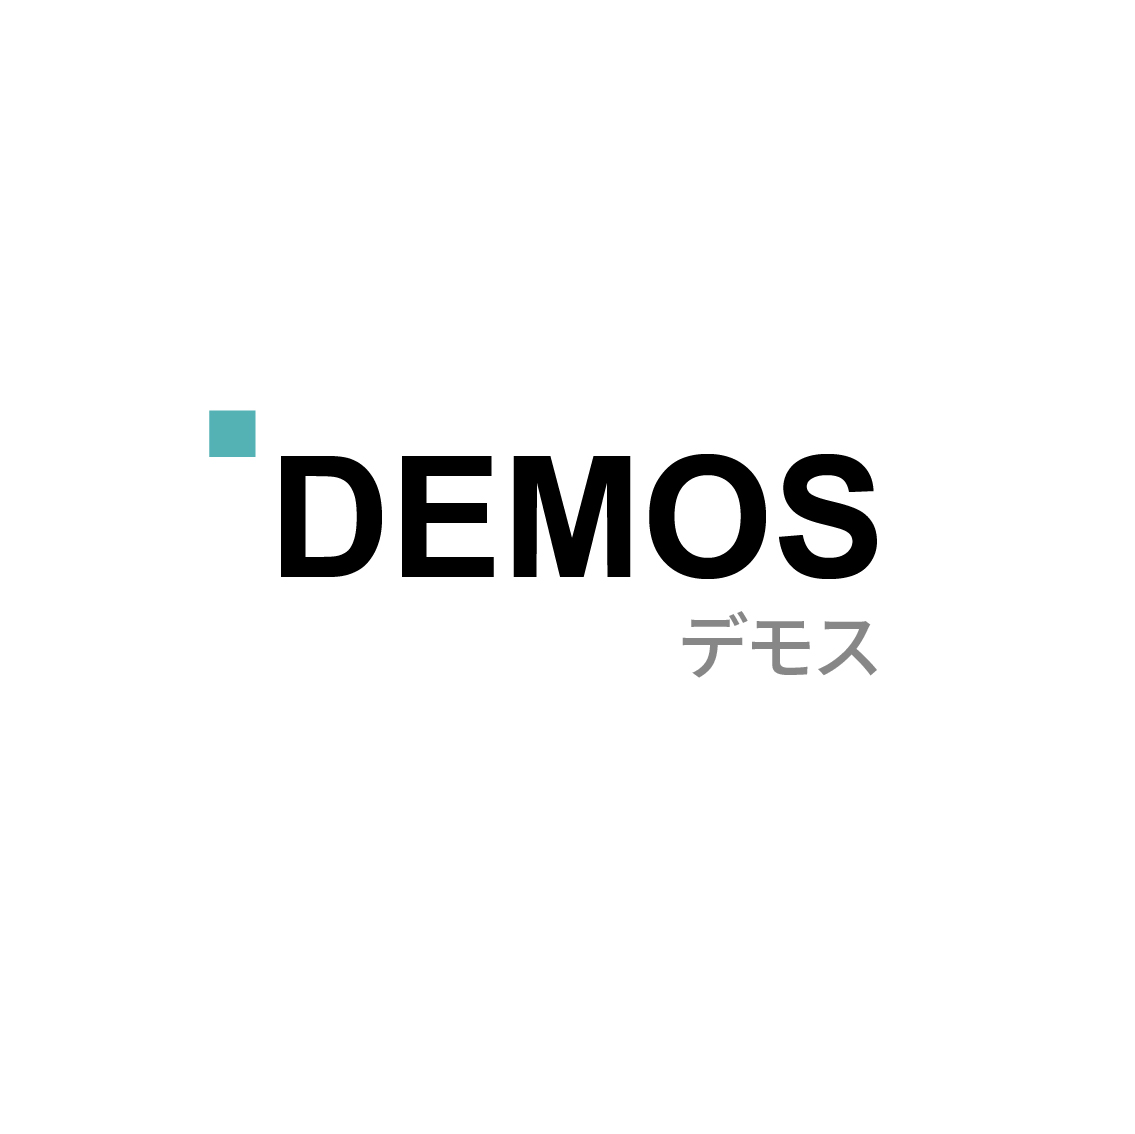 DEMOS_logo2.jpg